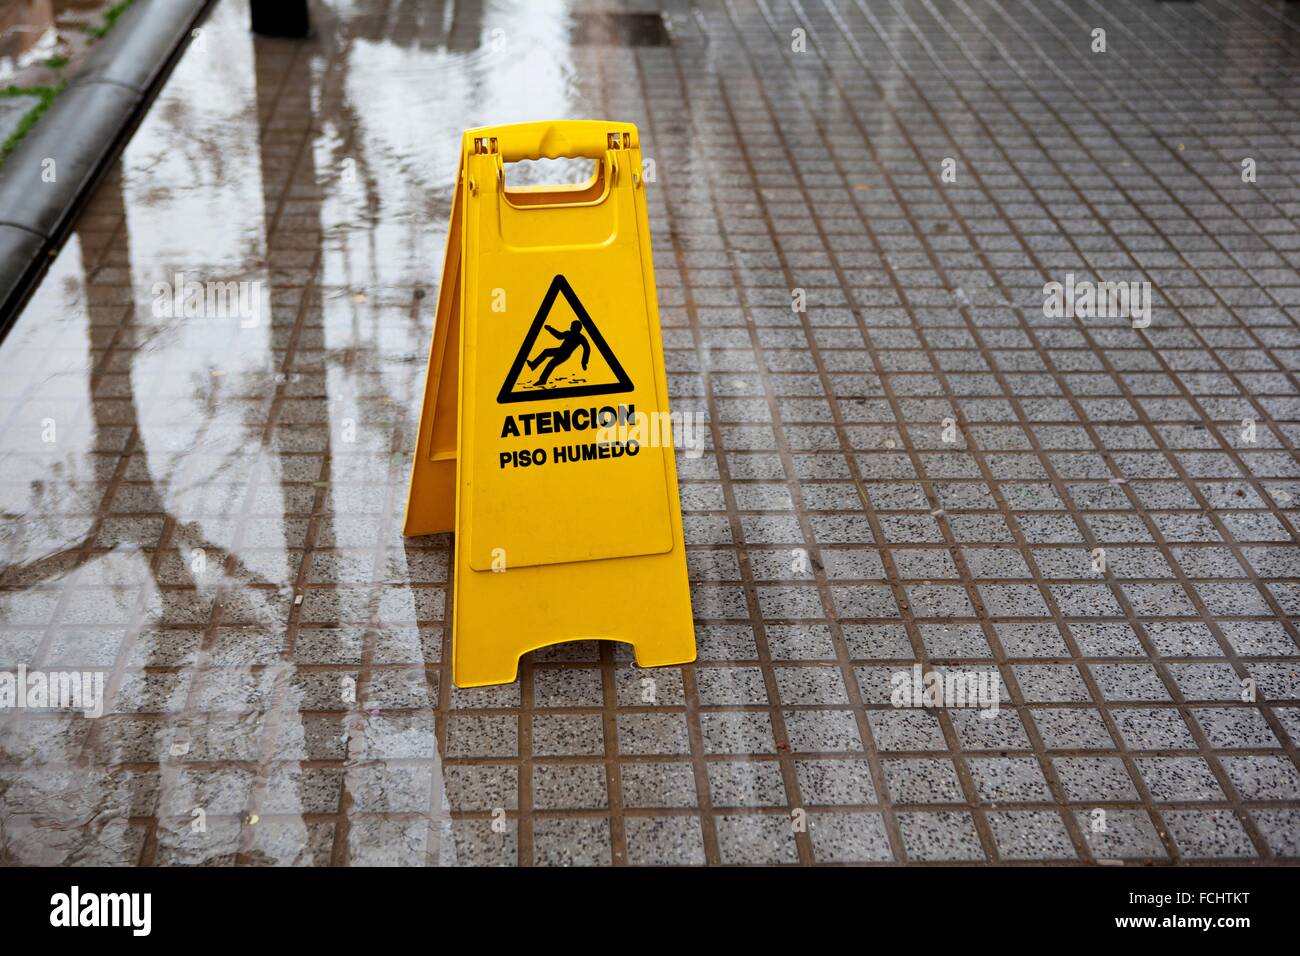 Wet floor sign in the street, Valencia, Spain Stock Photo